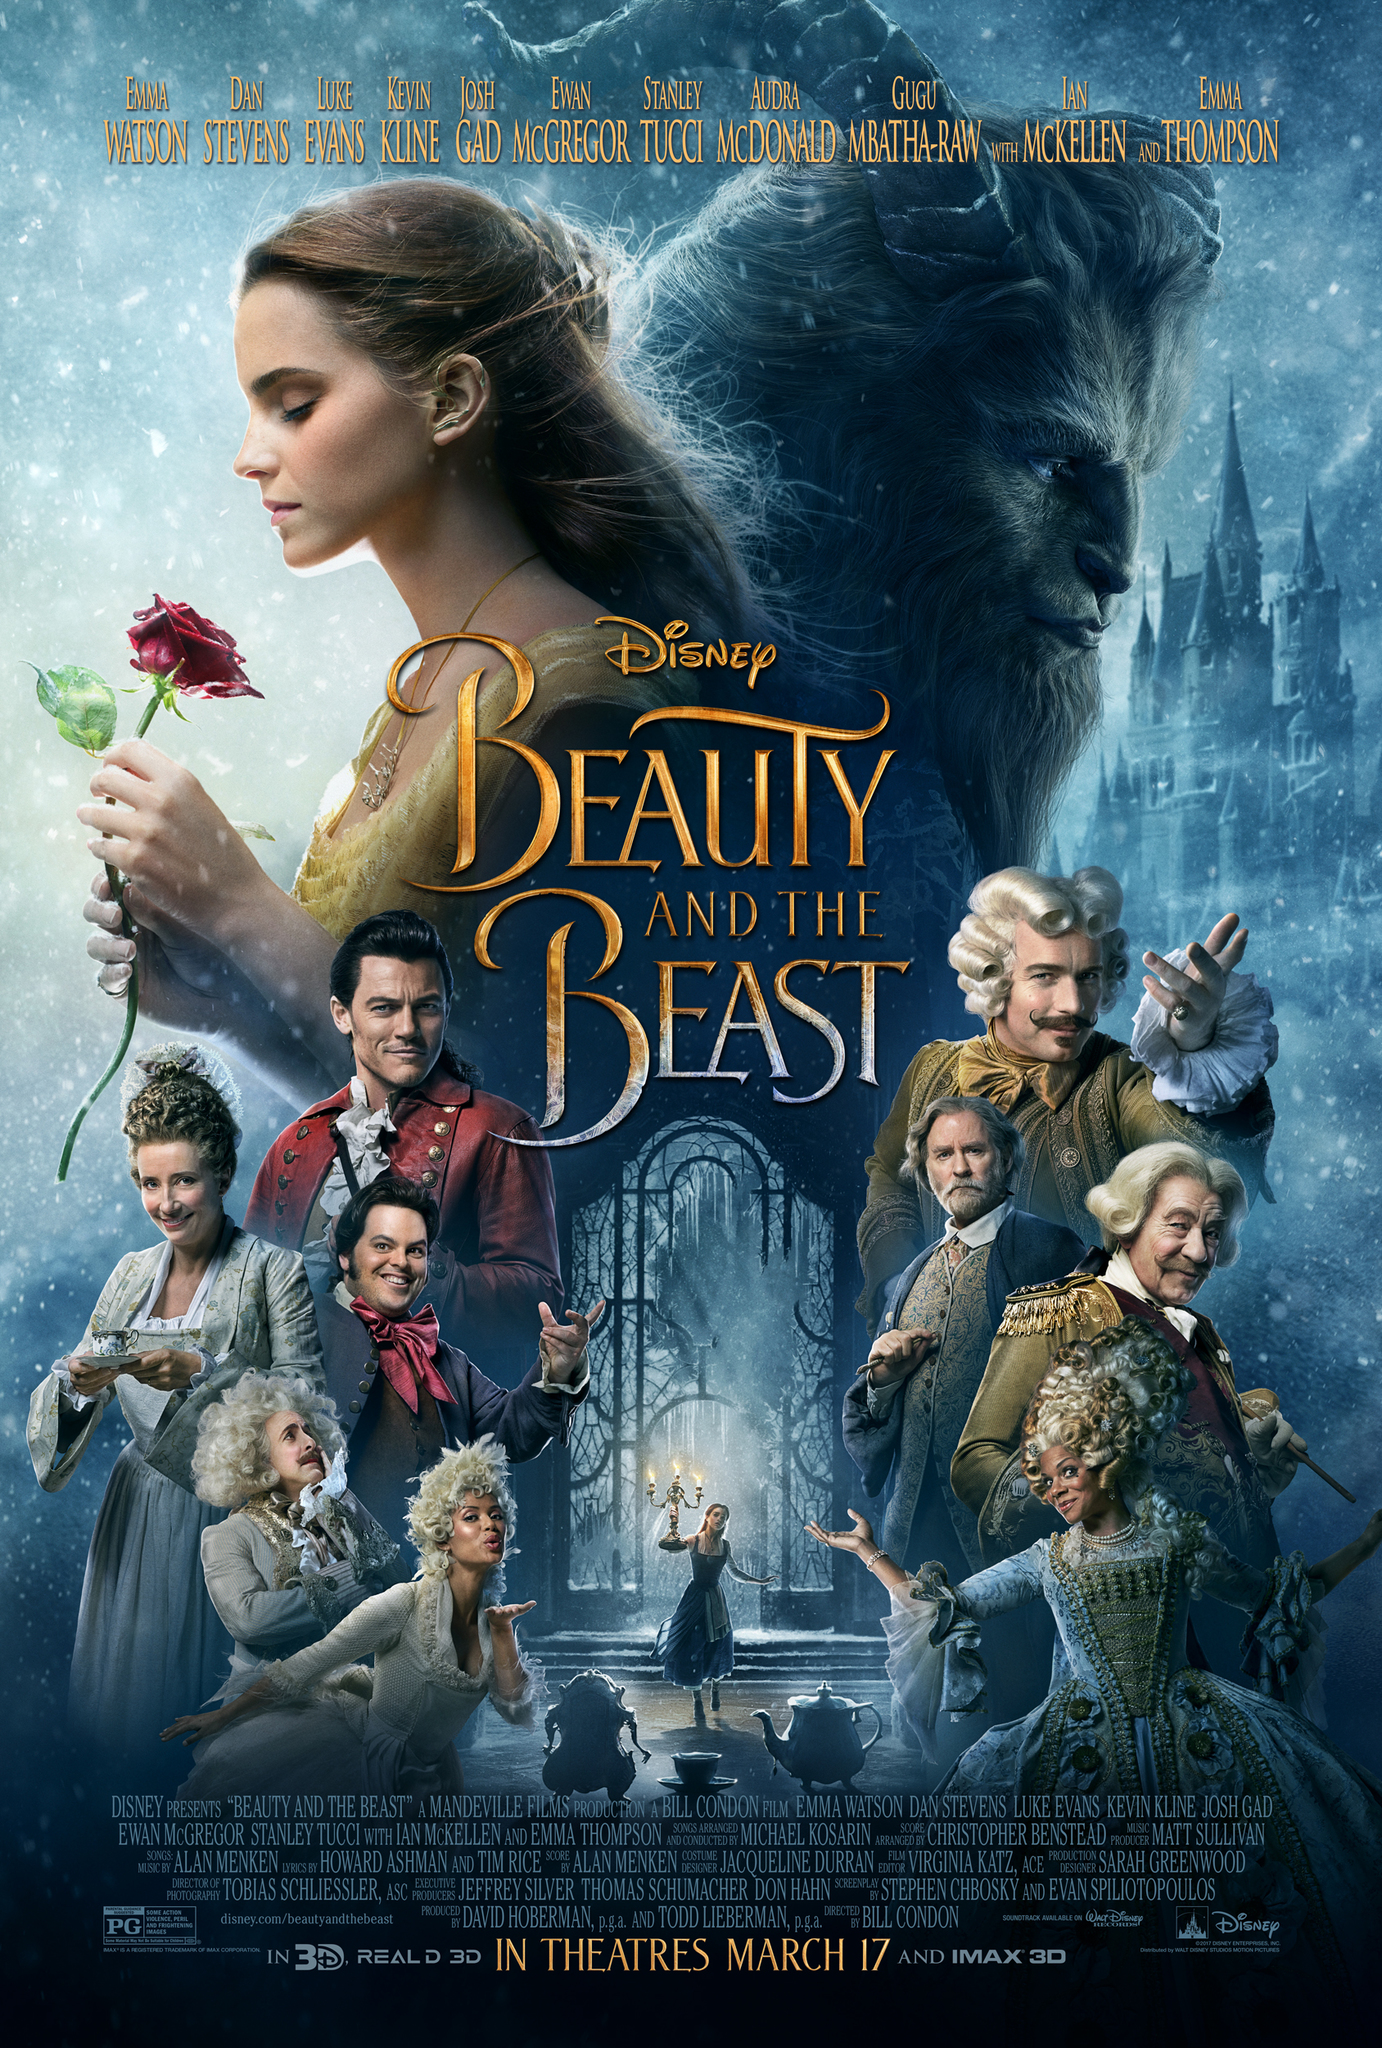 Stiahni si Filmy CZ/SK dabing Kraska a zvire/Beauty and the Beast (2017)(CZ/EN)[1080p] = CSFD 72%